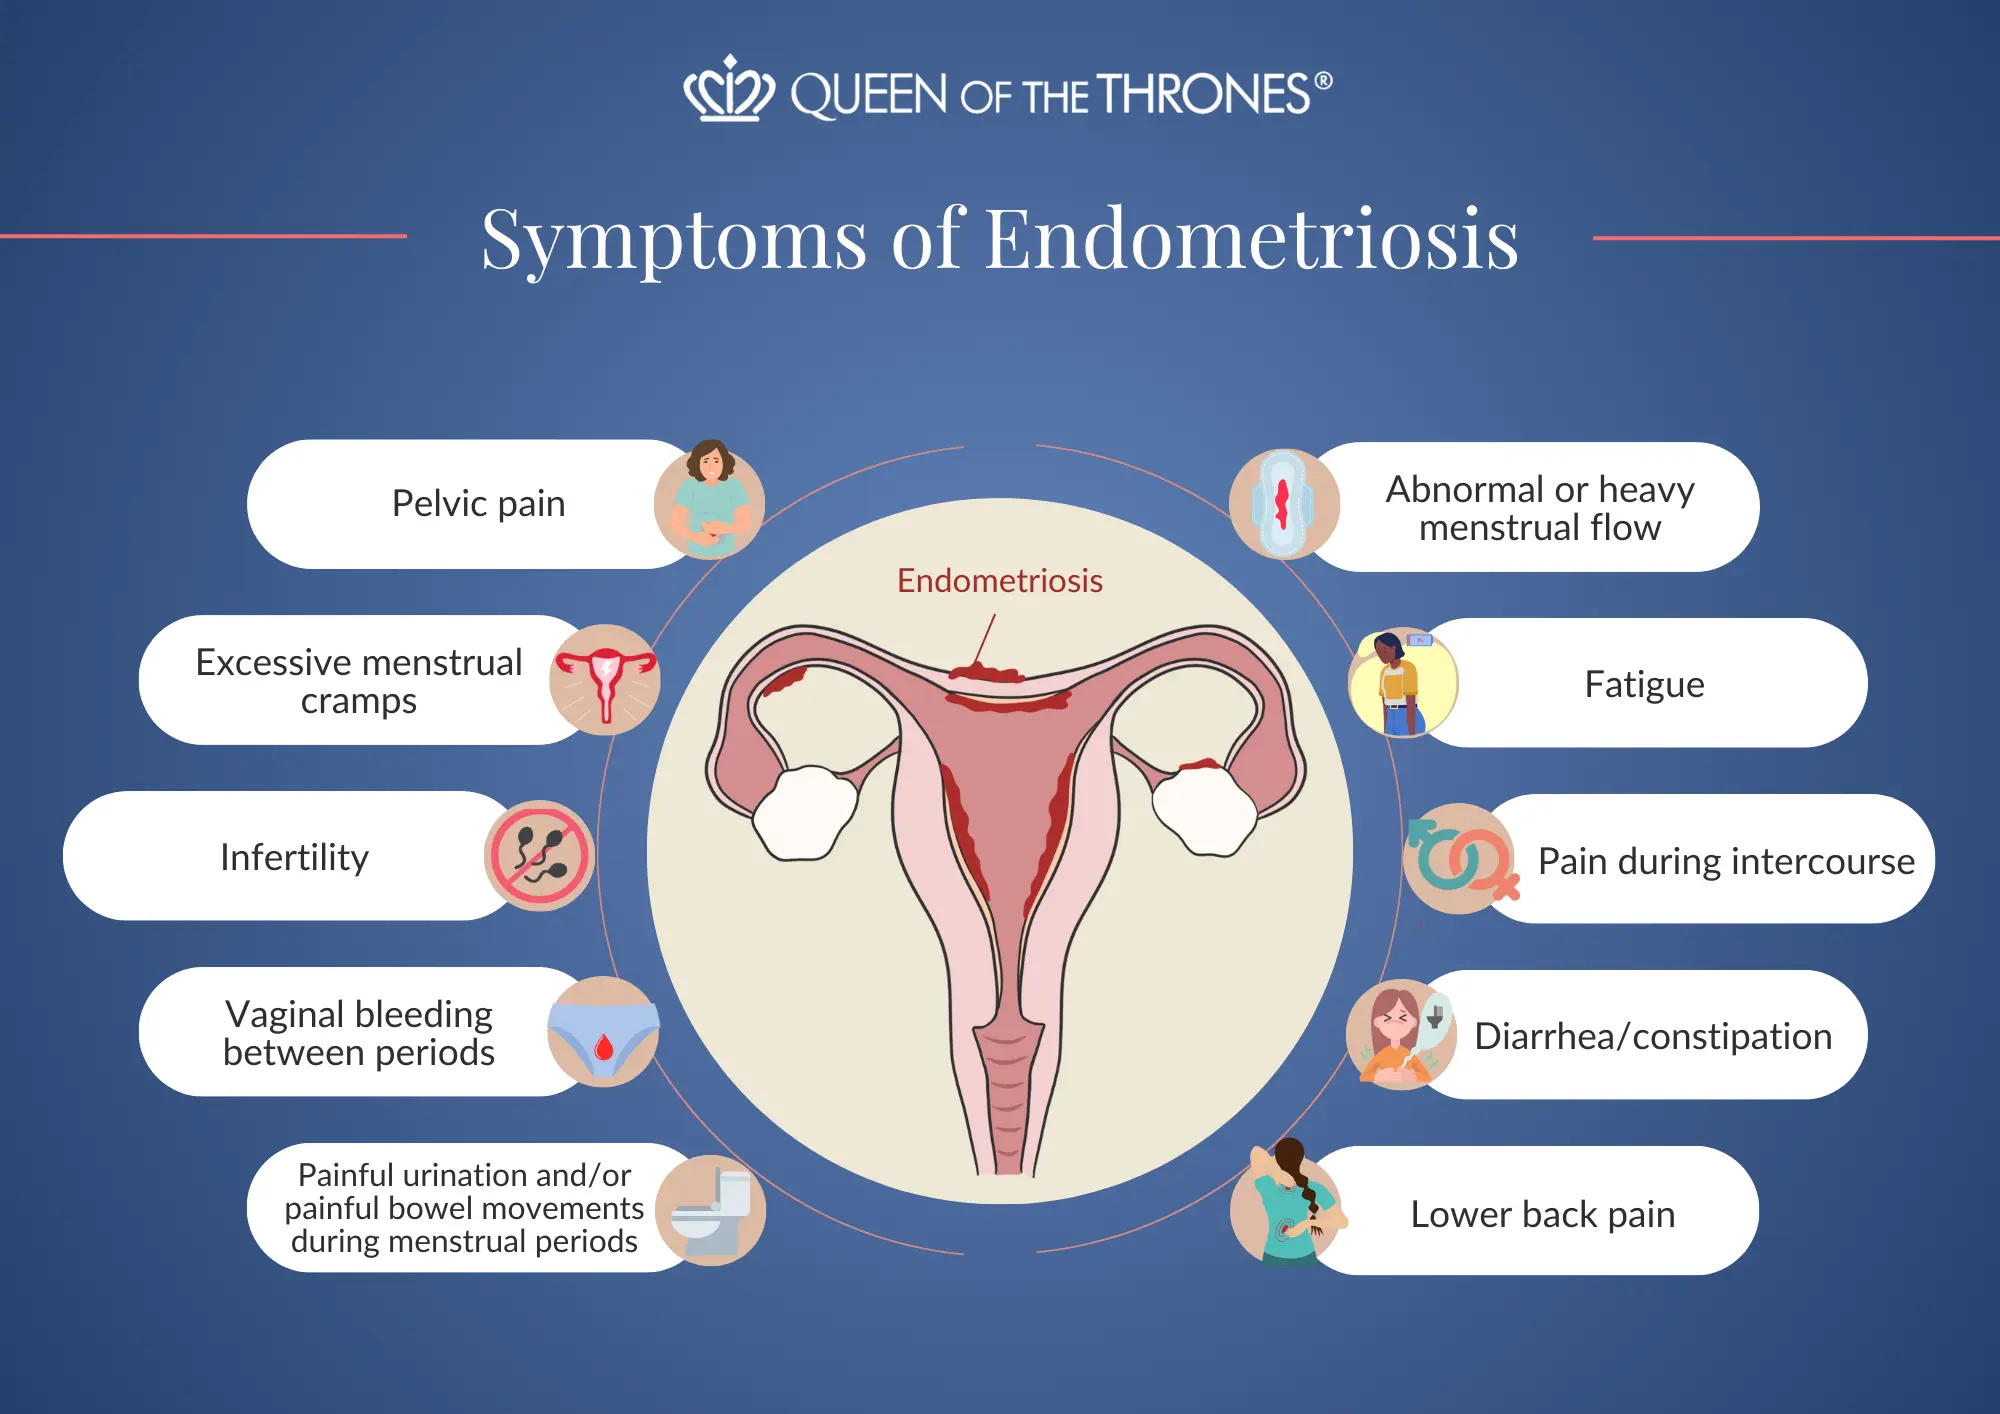 Symptoms of Endometriosis by Queens of the Thrones